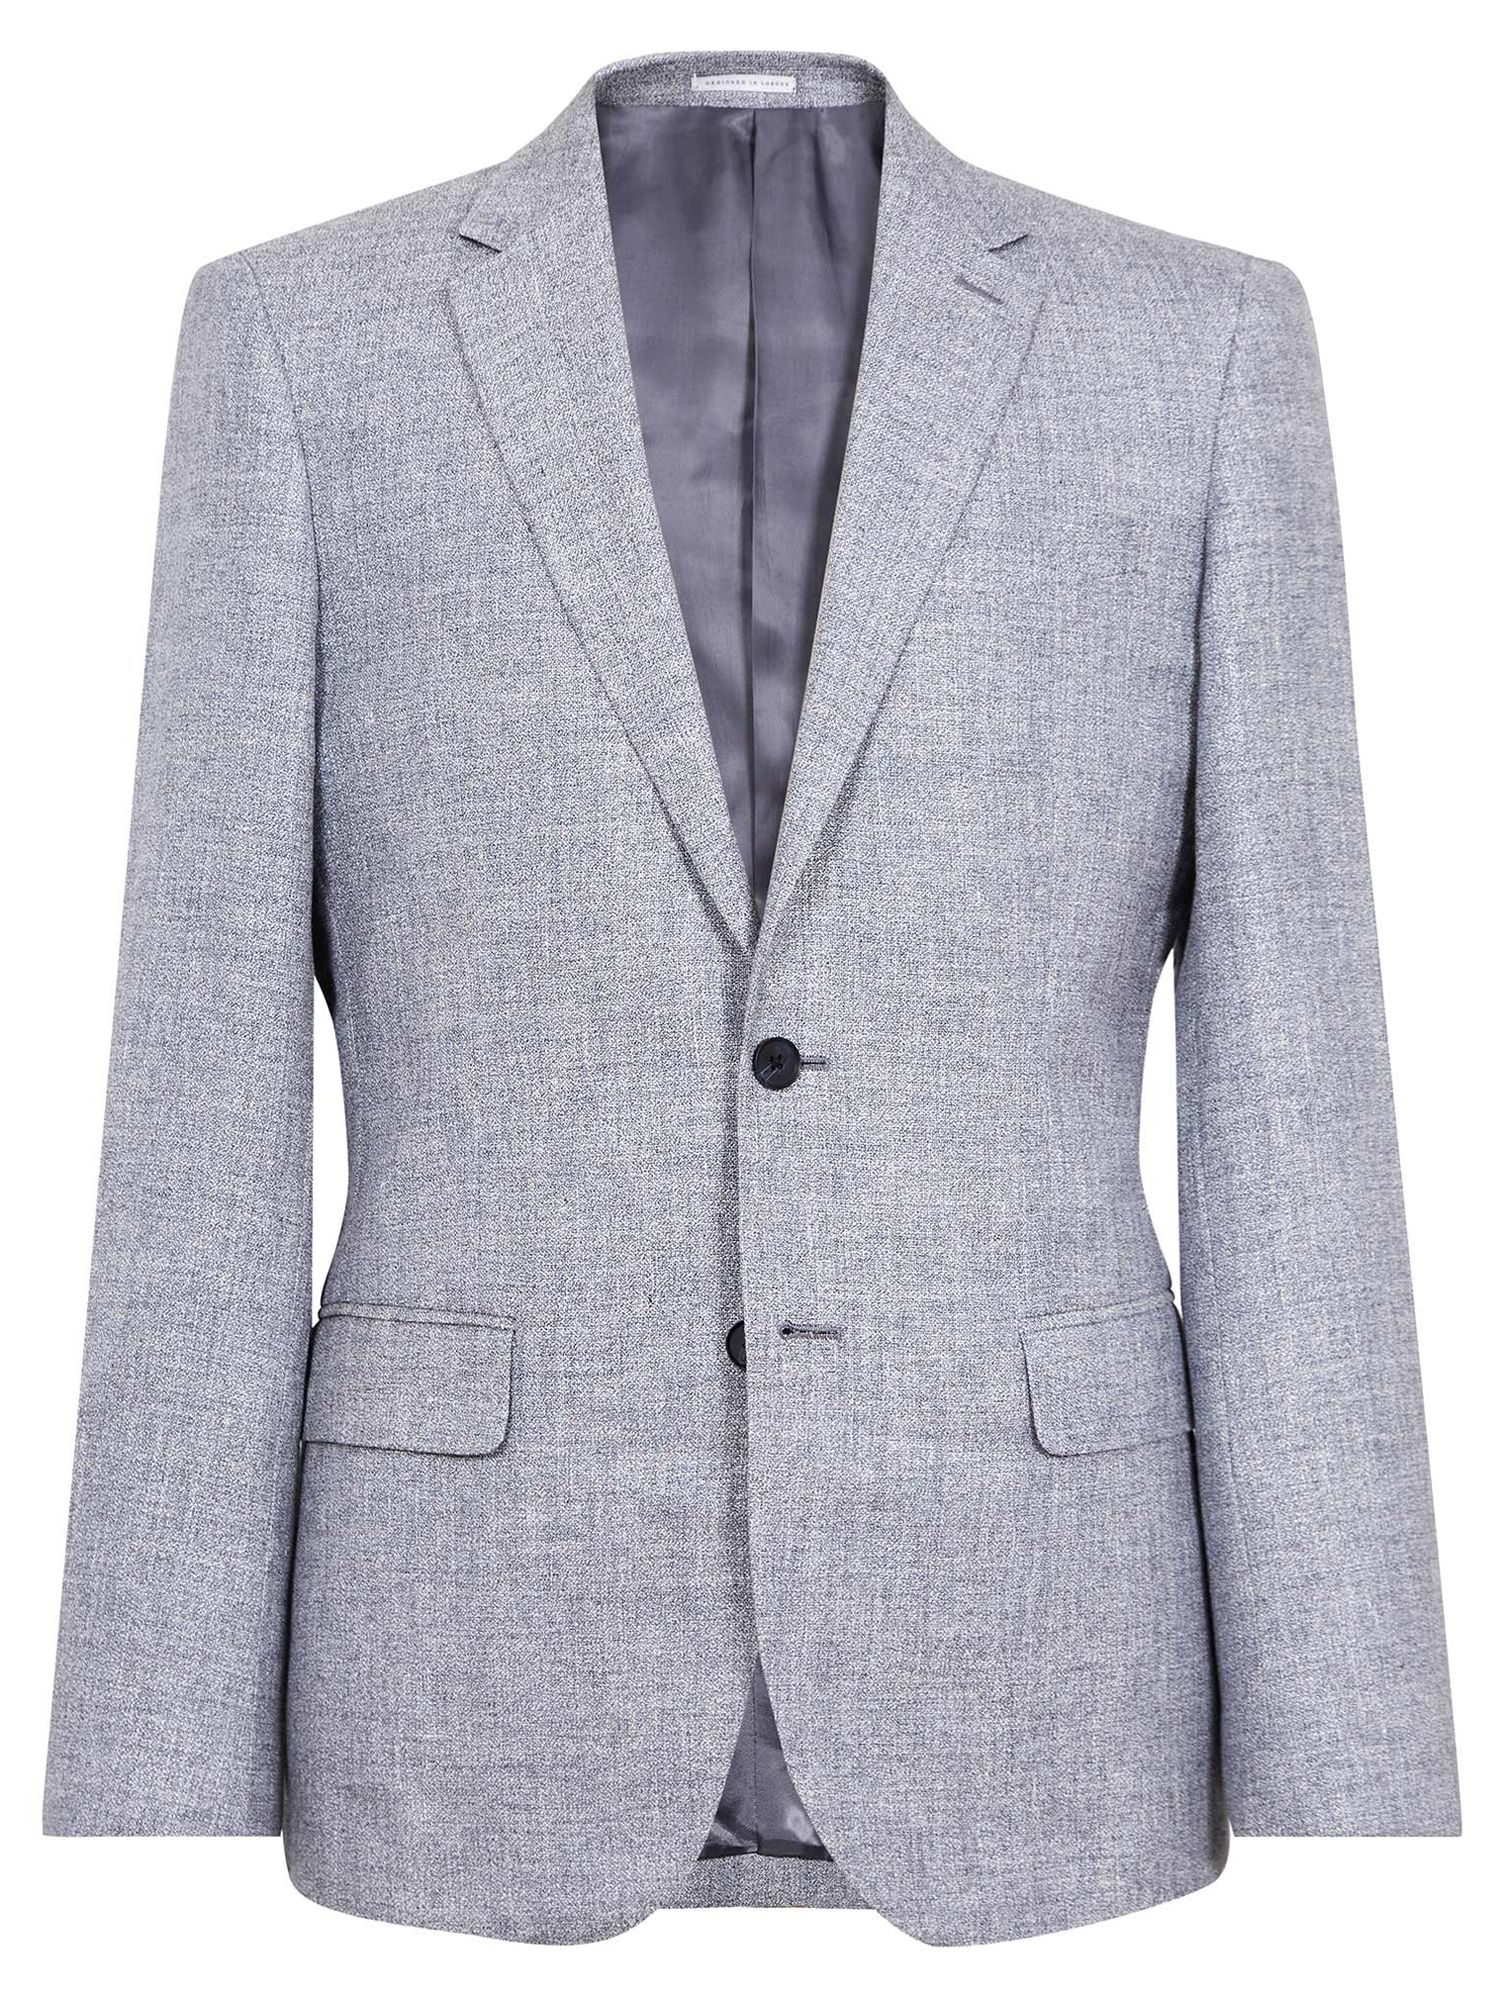 Reiss Amatrice Linen Blend Modern Fit Suit Jacket, Soft Blue at John Lewis & Partners